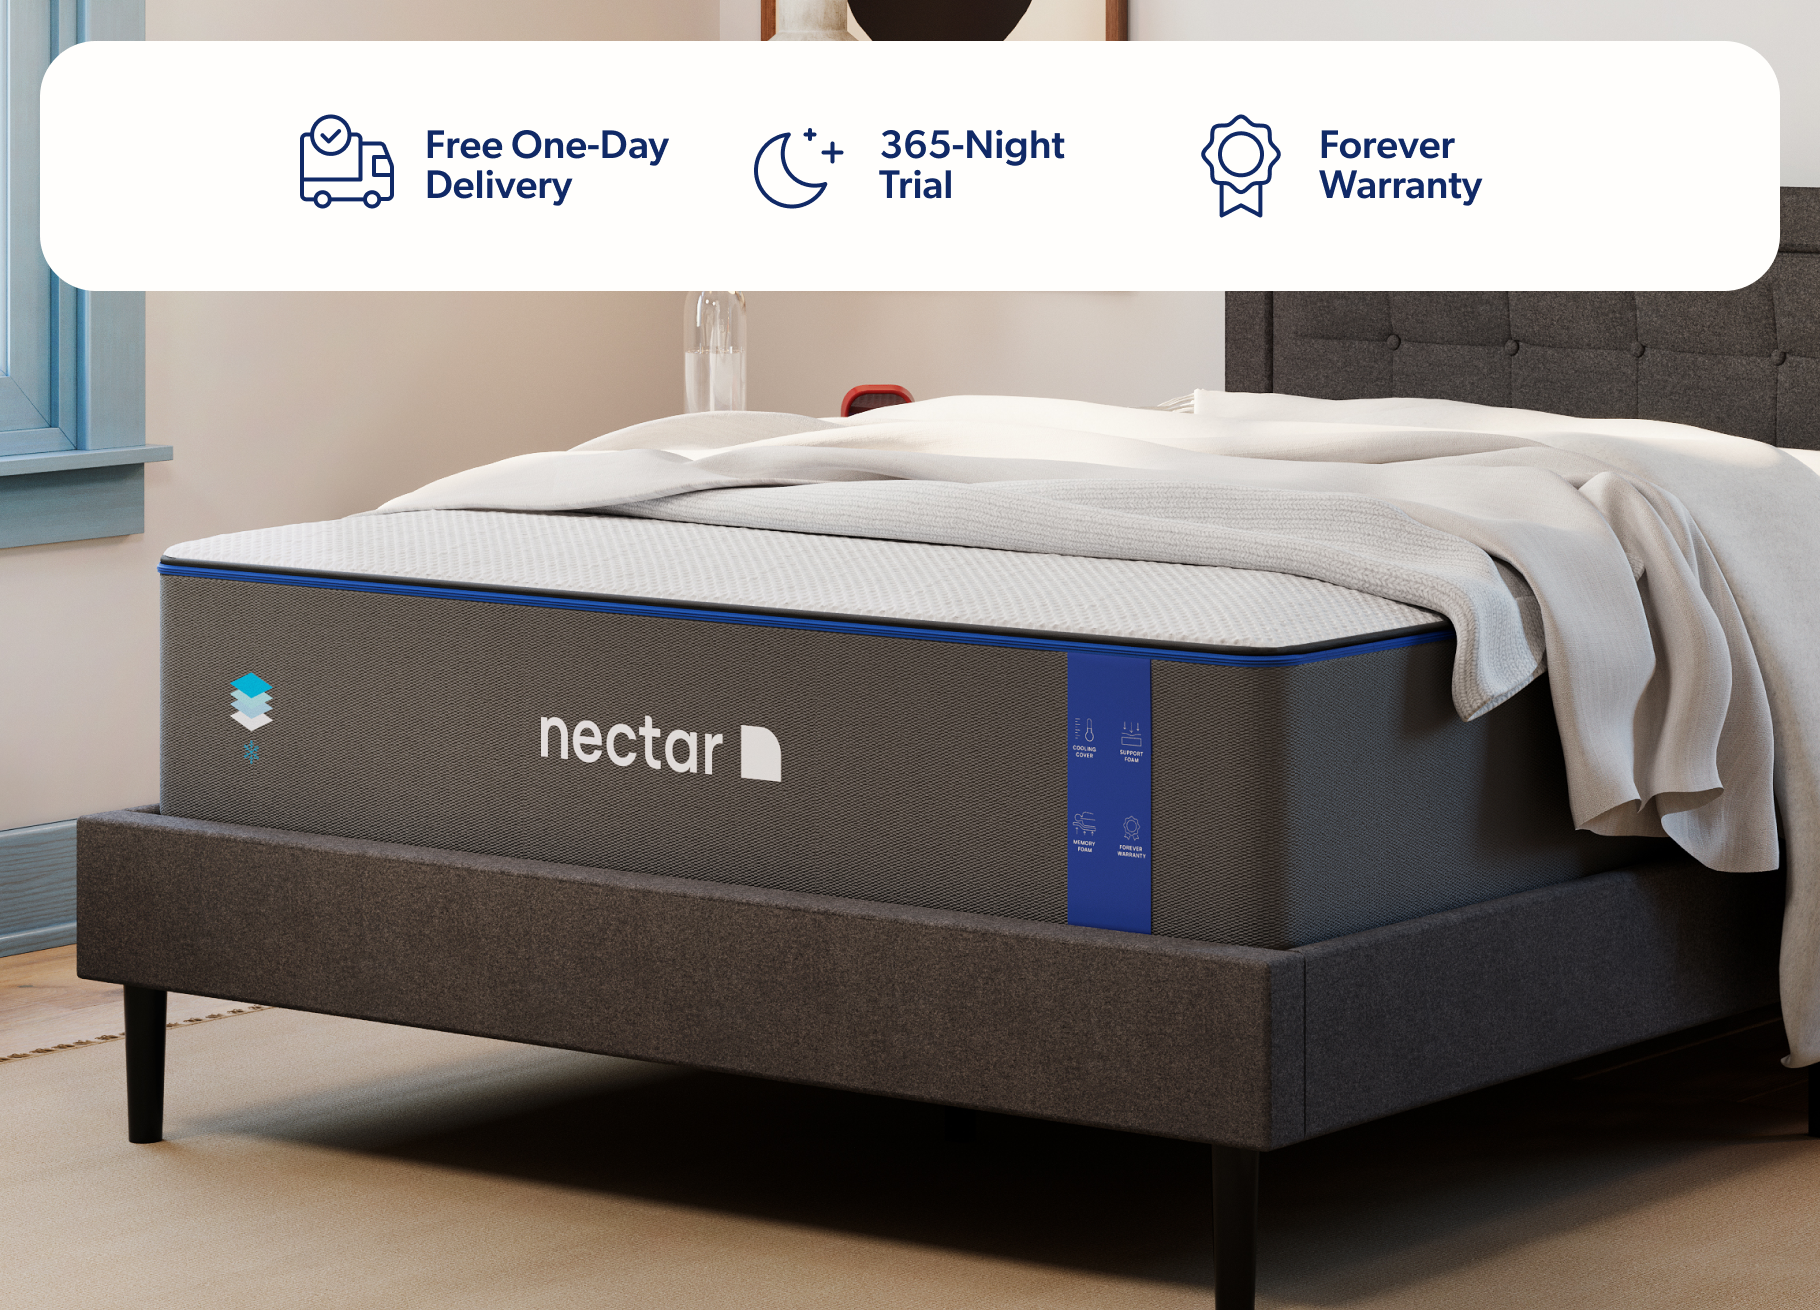 do nectar mattresses have fiberglass